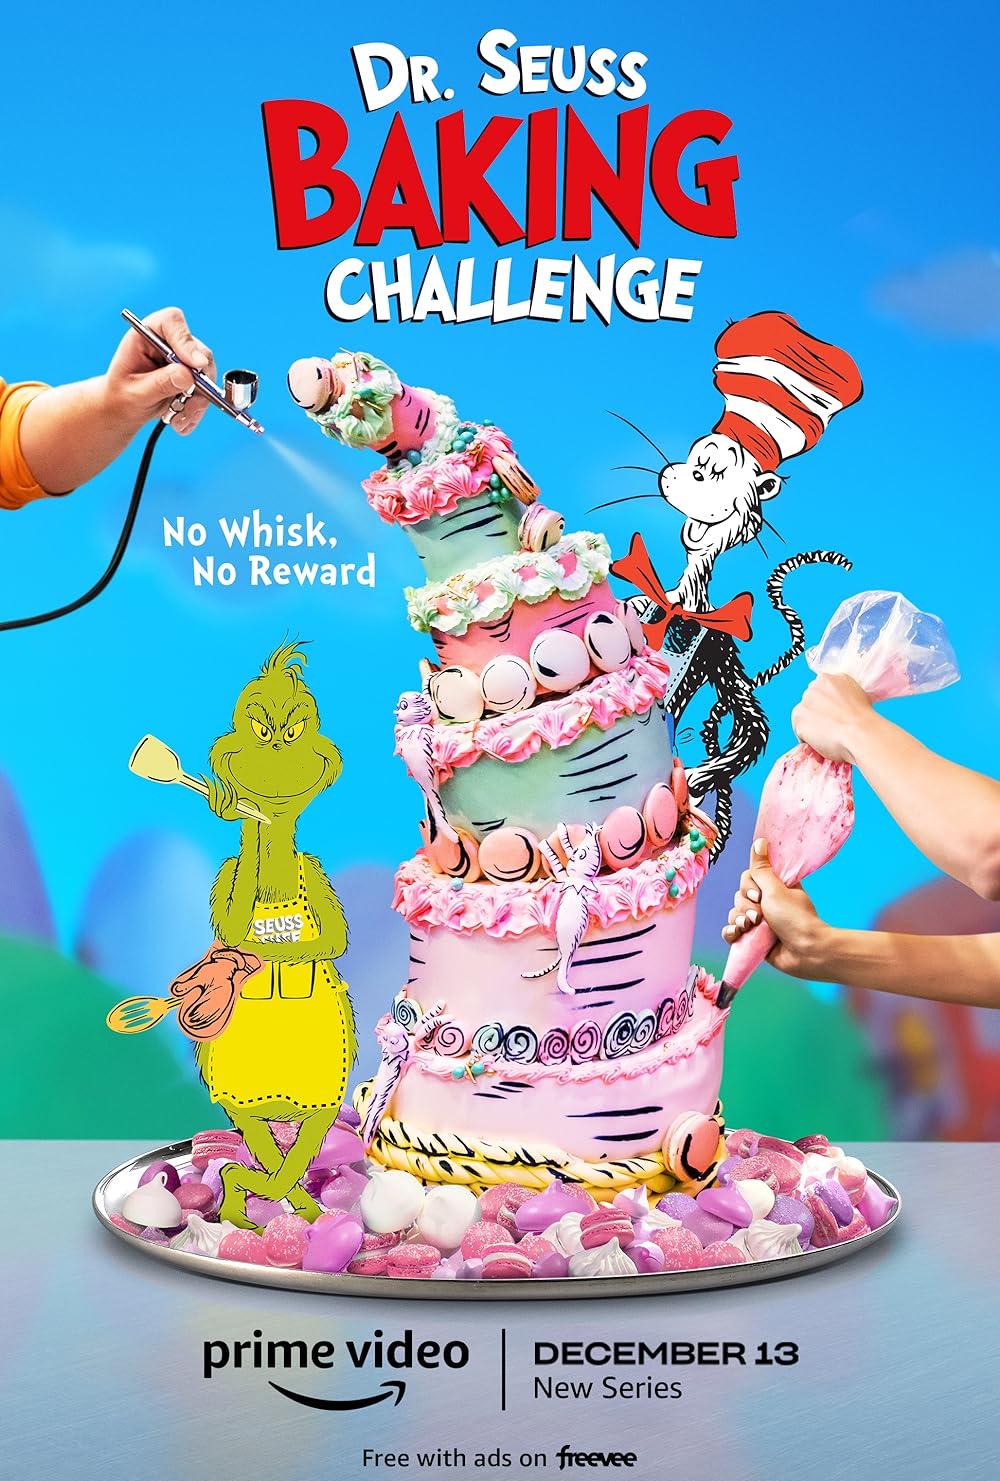 Dr. Seuss Baking Challenge